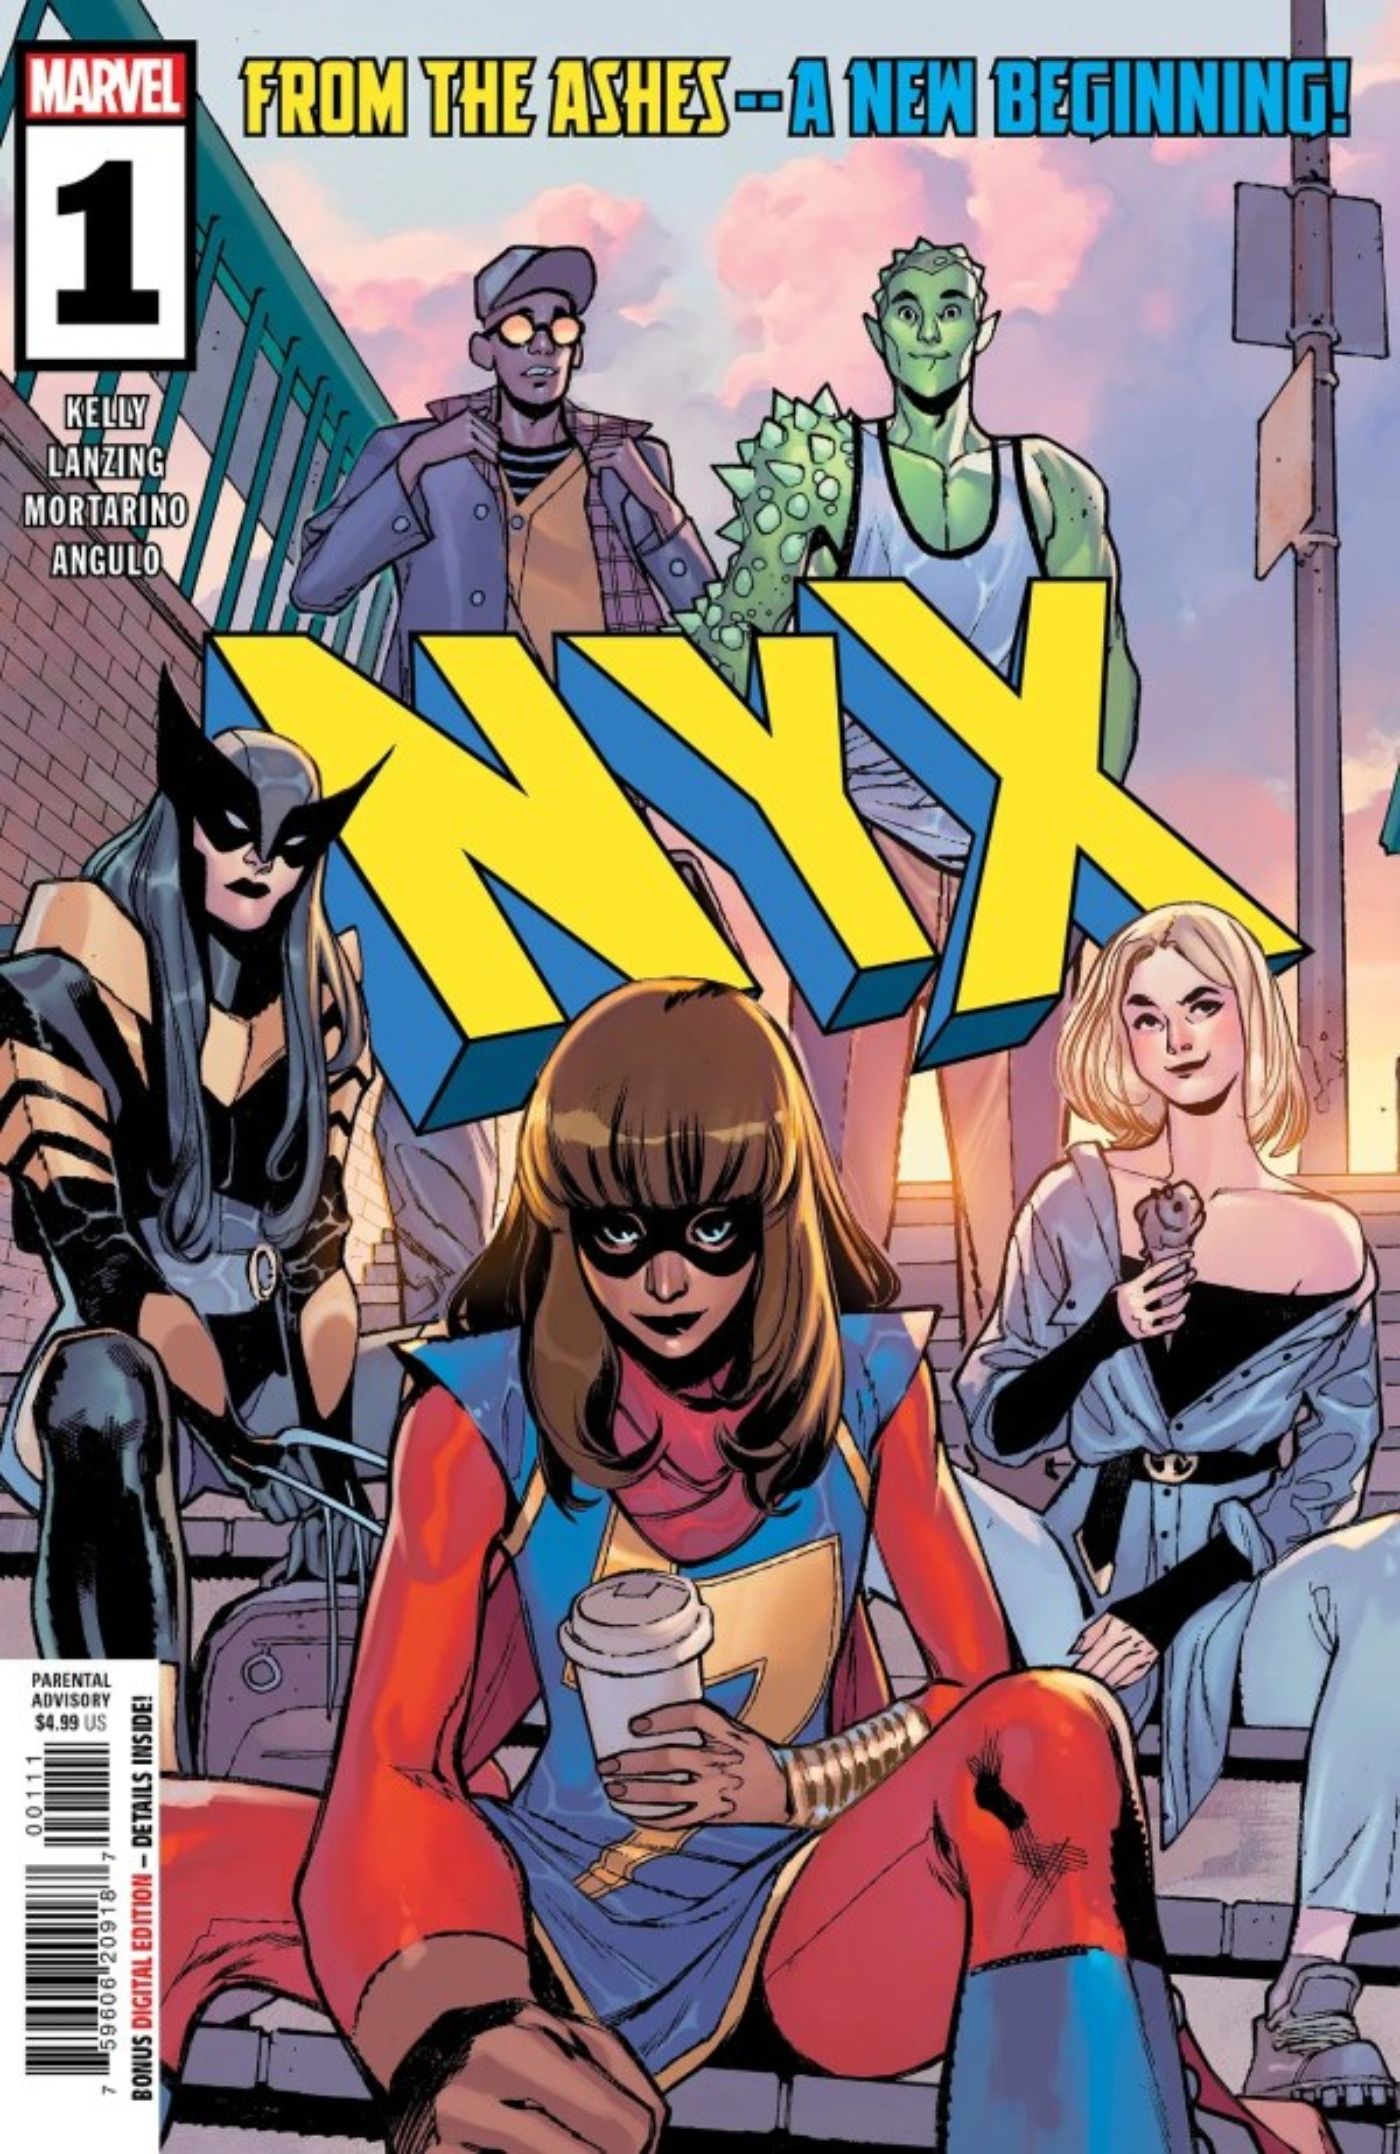 Capa da NYX #1 com Laura Kinney, Kamala Khan e outras.